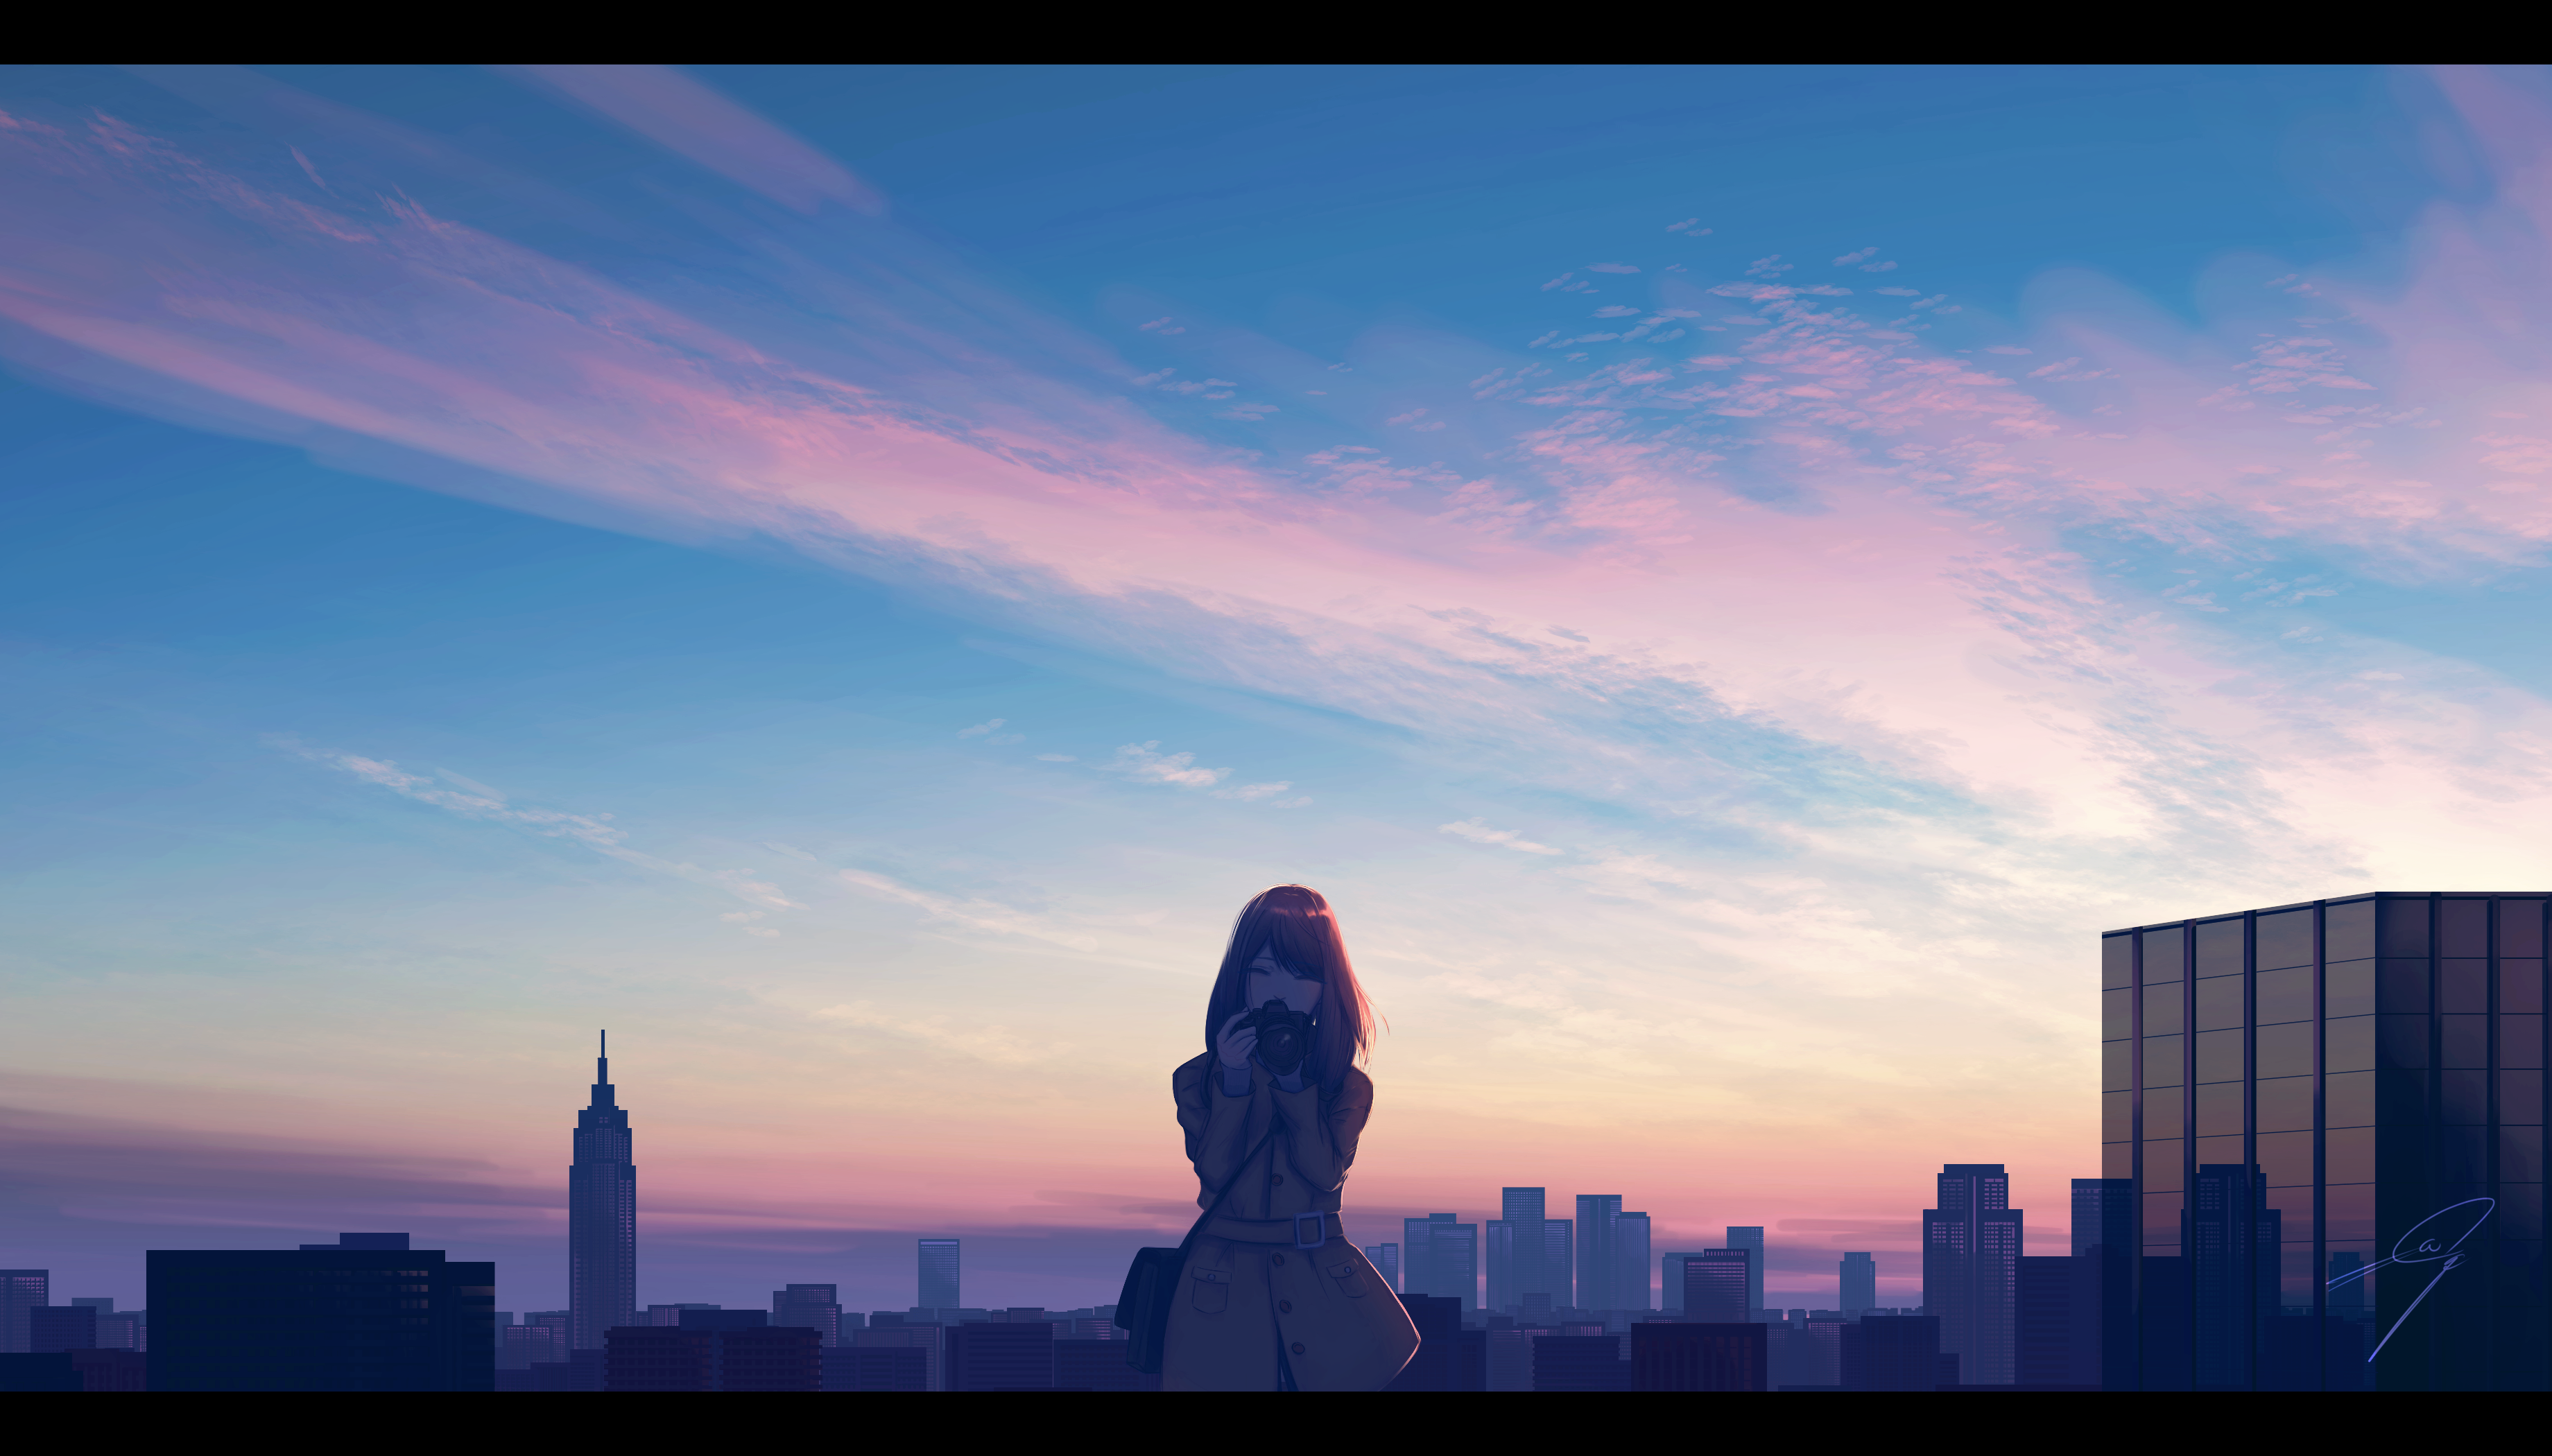 Anime 3680x2100 anime anime girls artwork twilight sunset clouds city skyline Empire State Building New York City Manhattan sky